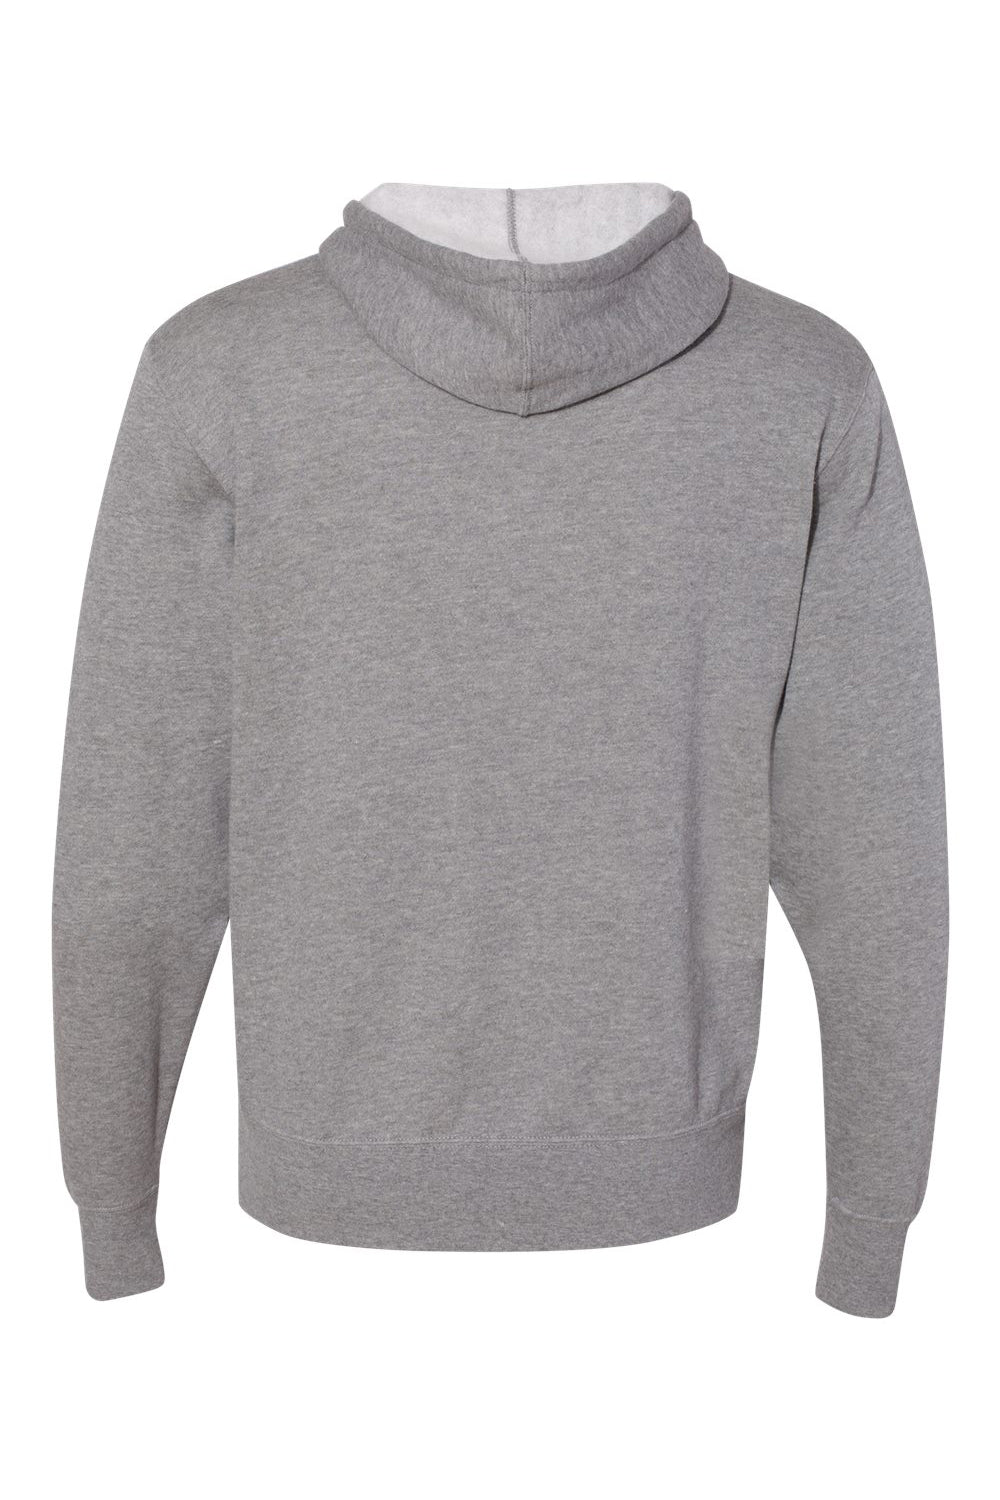 Independent Trading Co. AFX90UN Mens Hooded Sweatshirt Hoodie Heather Gunmetal Grey Flat Back